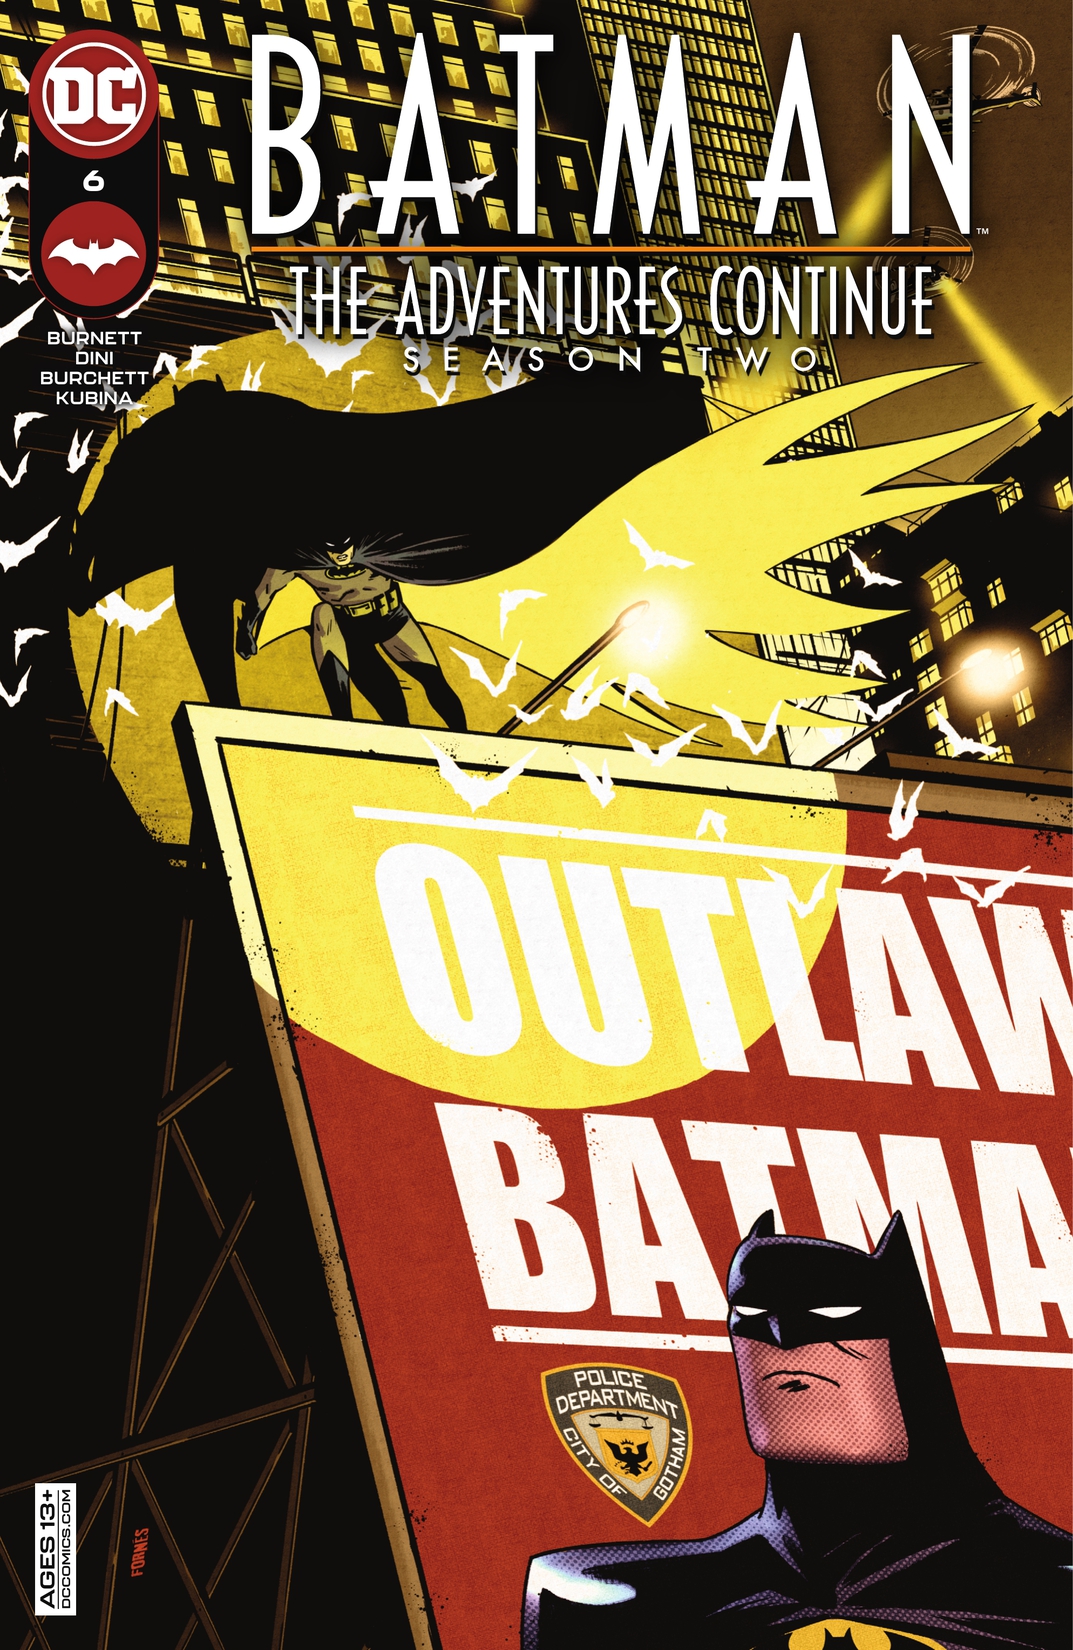 Batman: The Adventures Continue Season Two #6 preview images